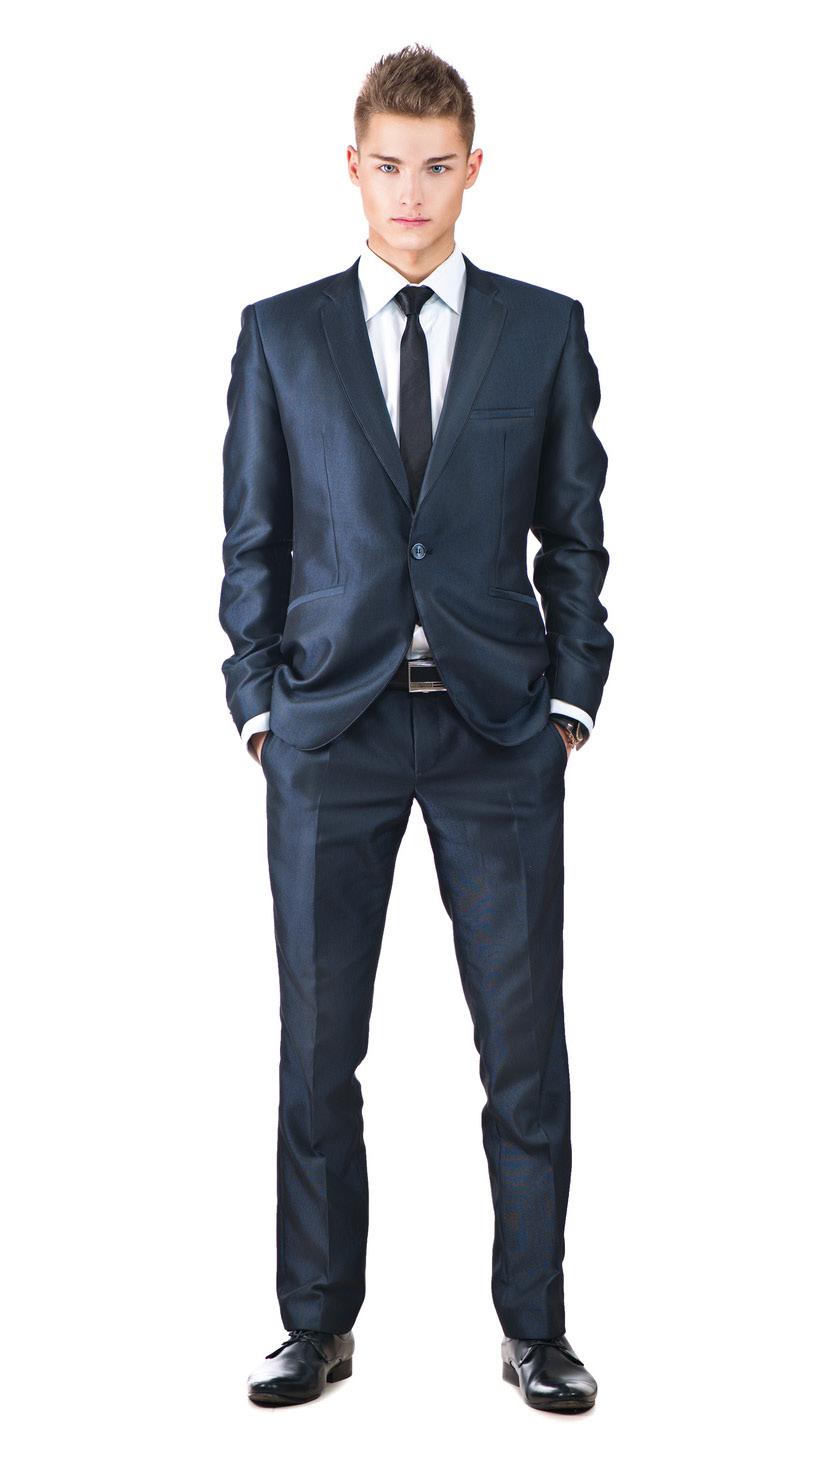 Business [smart] Attire Men Suit Dress Shirt Tie Belt